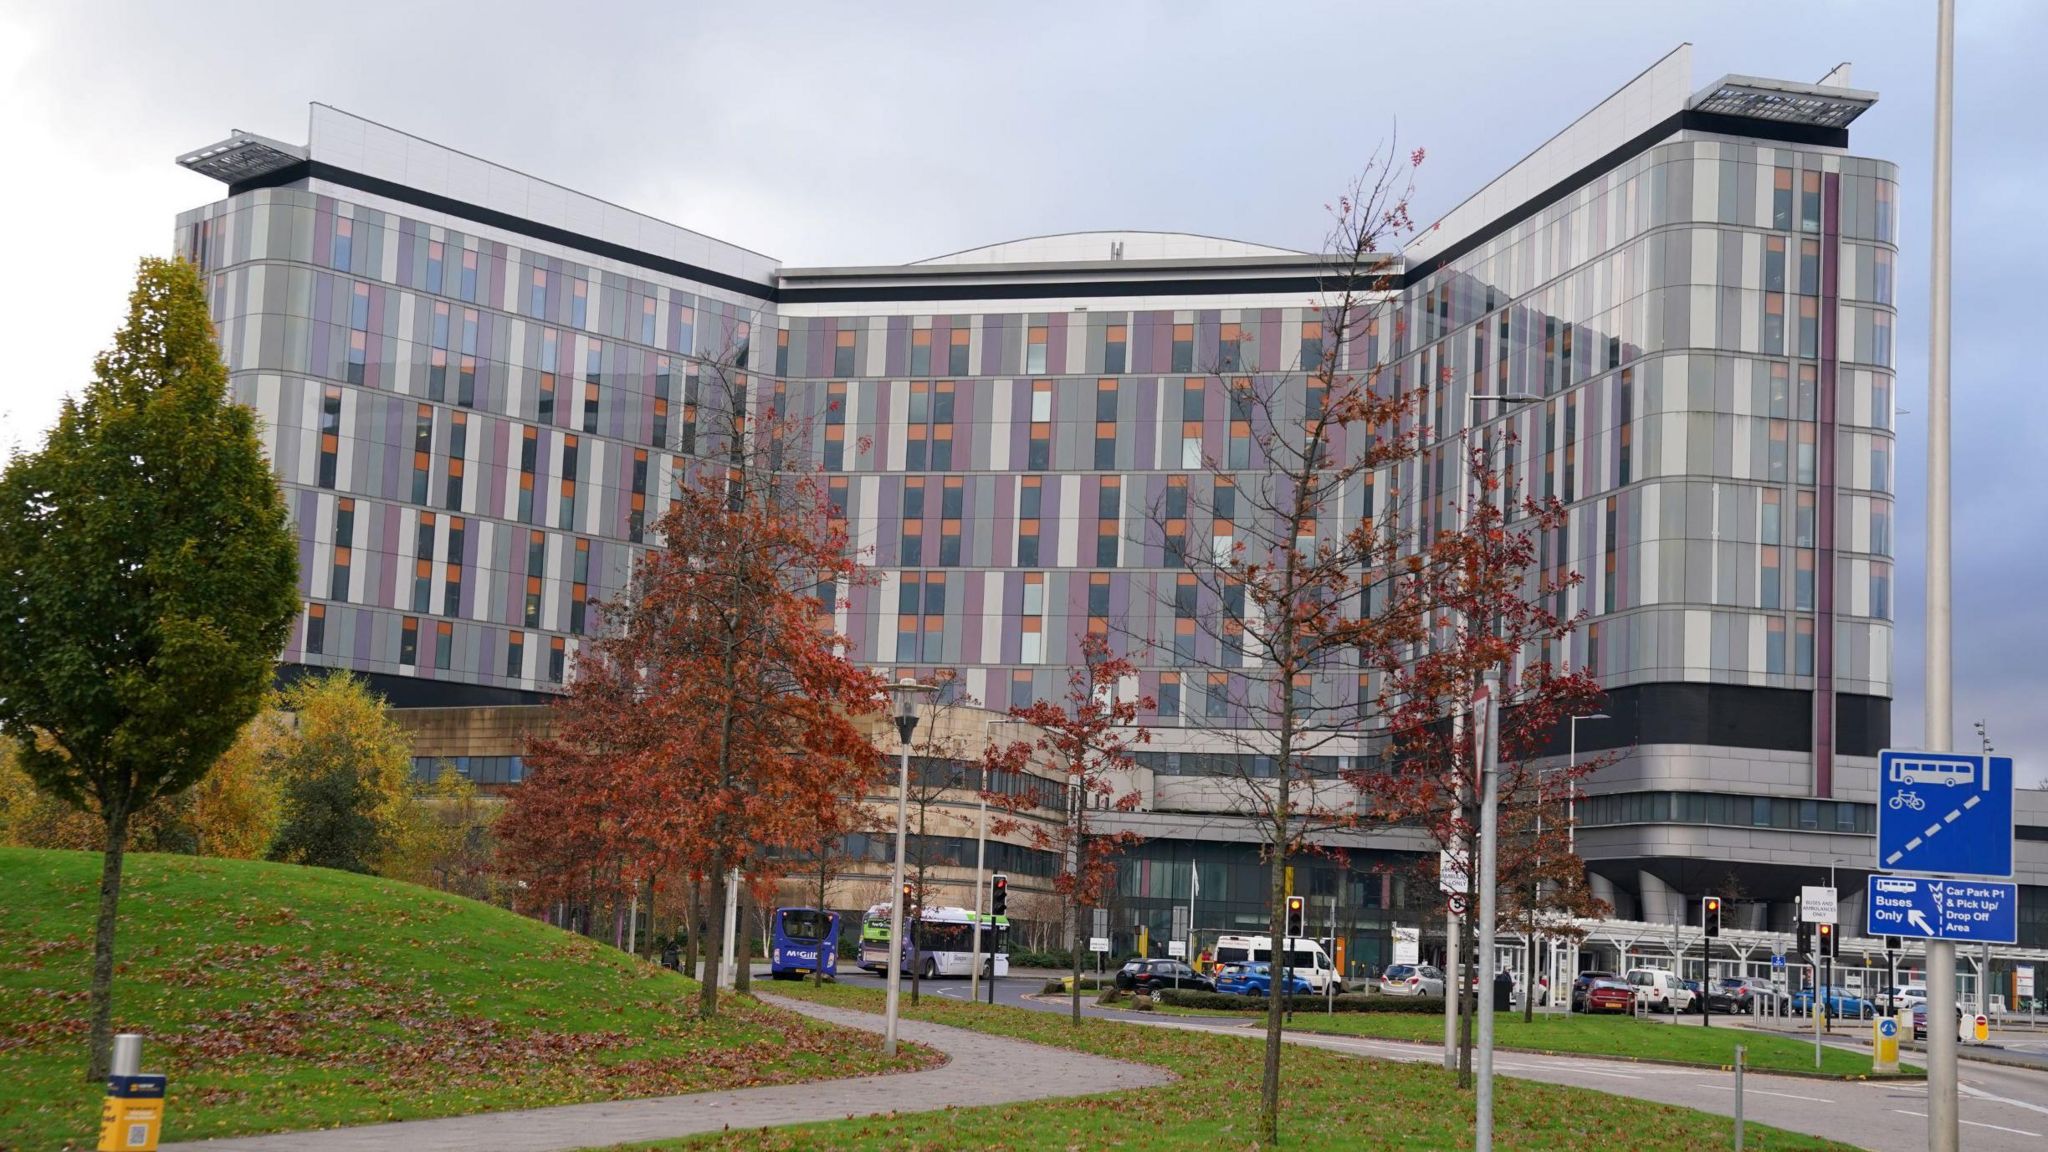 The Queen Elizabeth University hospital in Glasgow